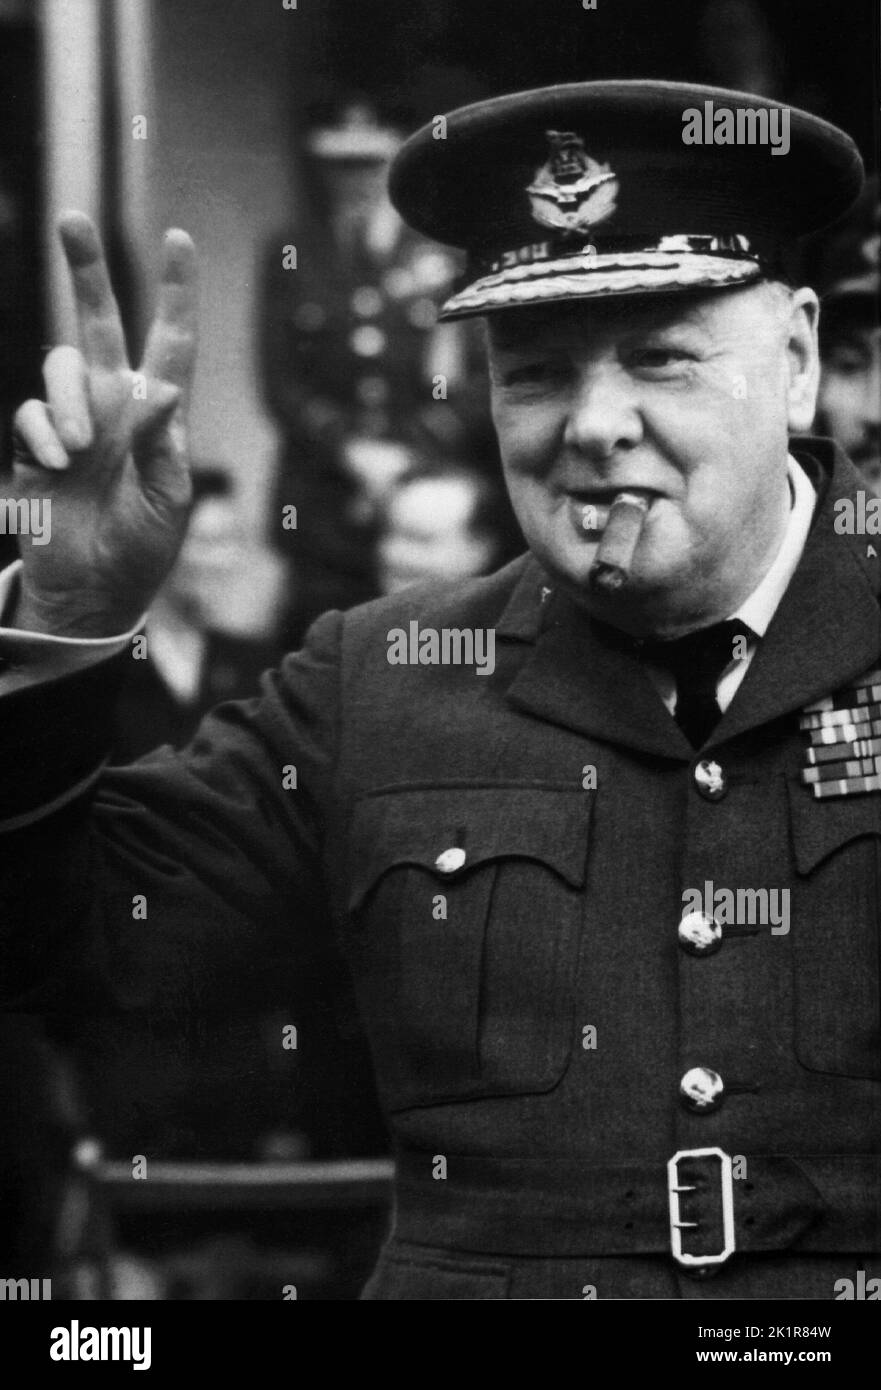 Winston Churchill in post-war photograph dressed in RAF uniform Stock Photo